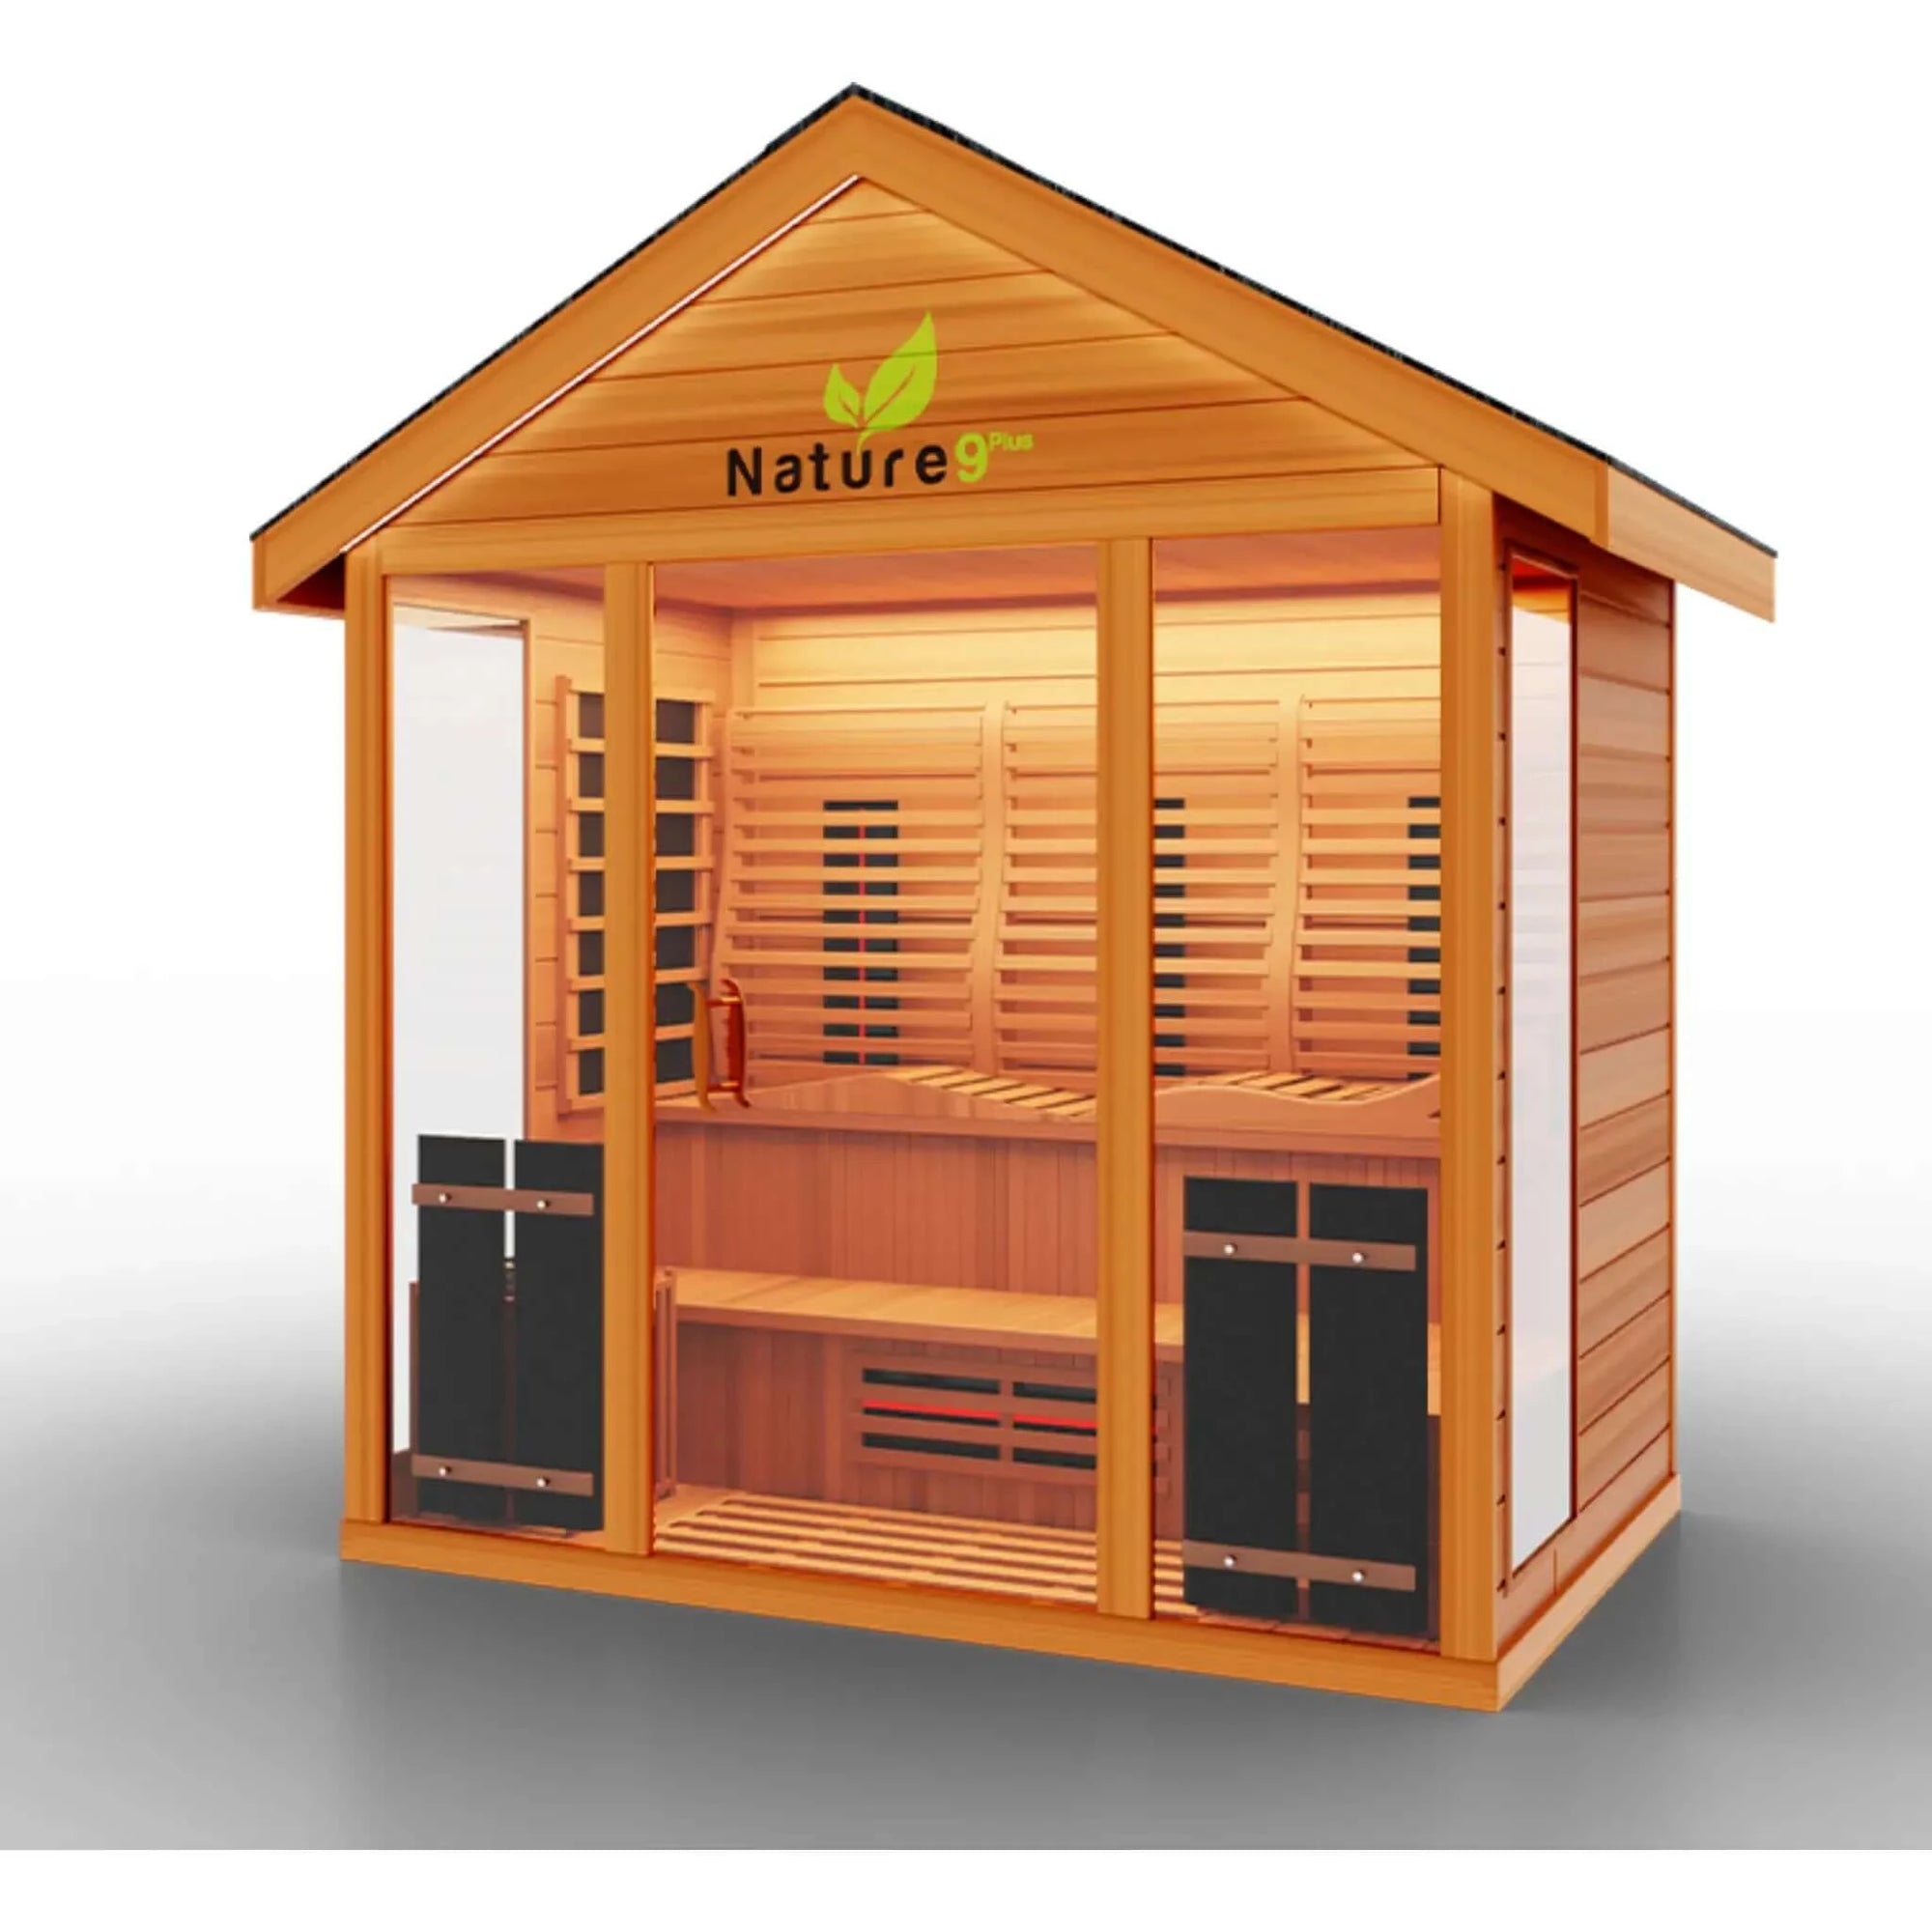 Medical Nature 9 Plus Outdoor Hybrid Sauna